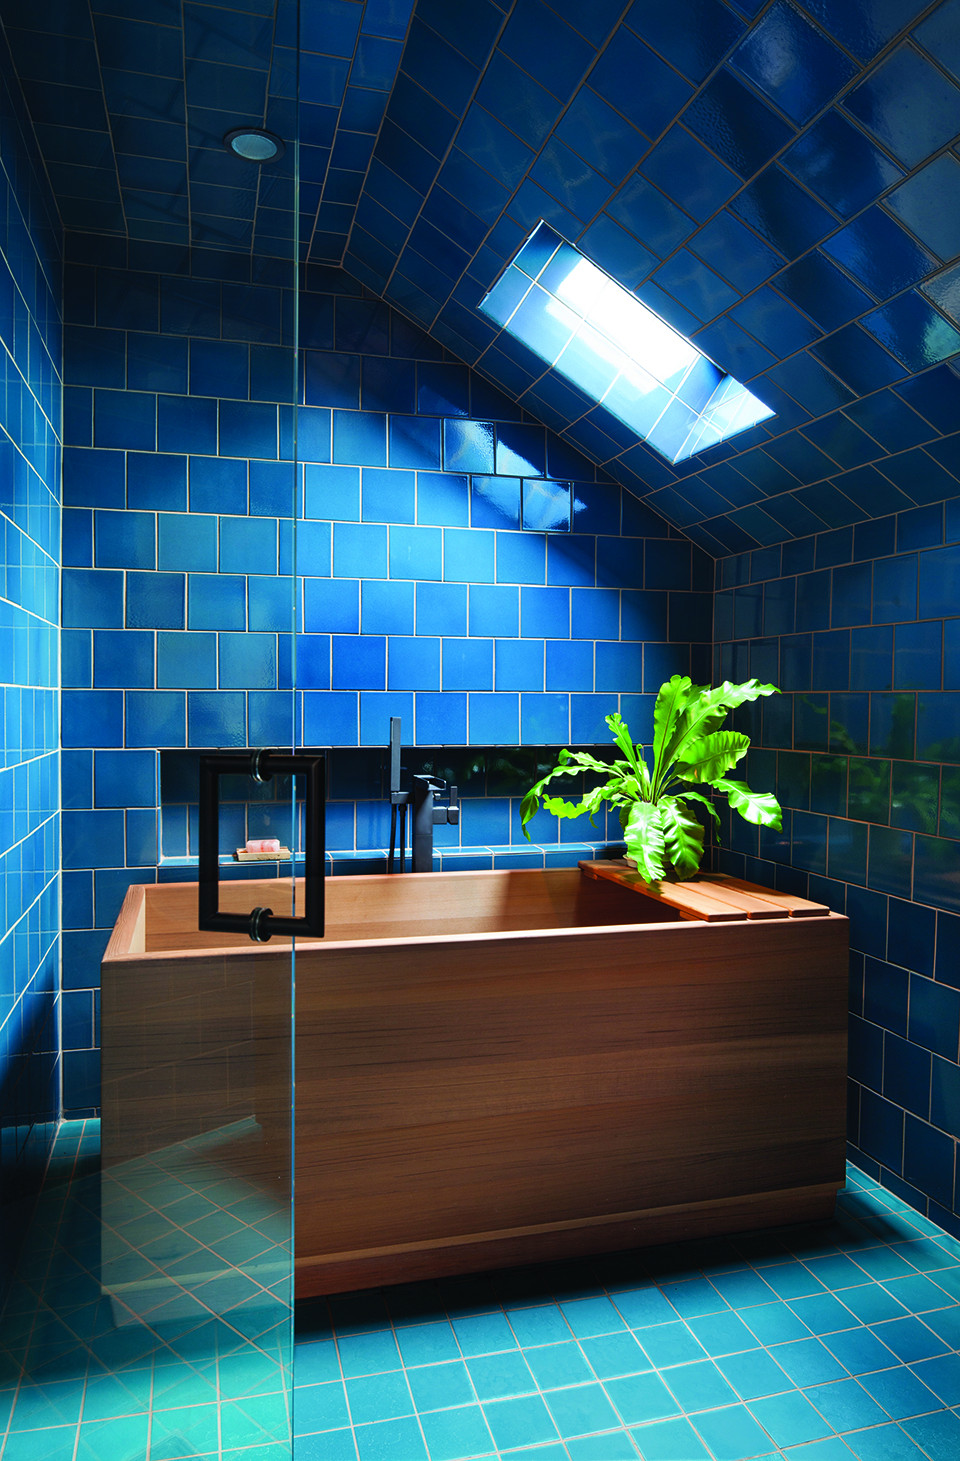 Bathroom Remodeling Portland Or
 Howells Architecture Design transforms a North Portland